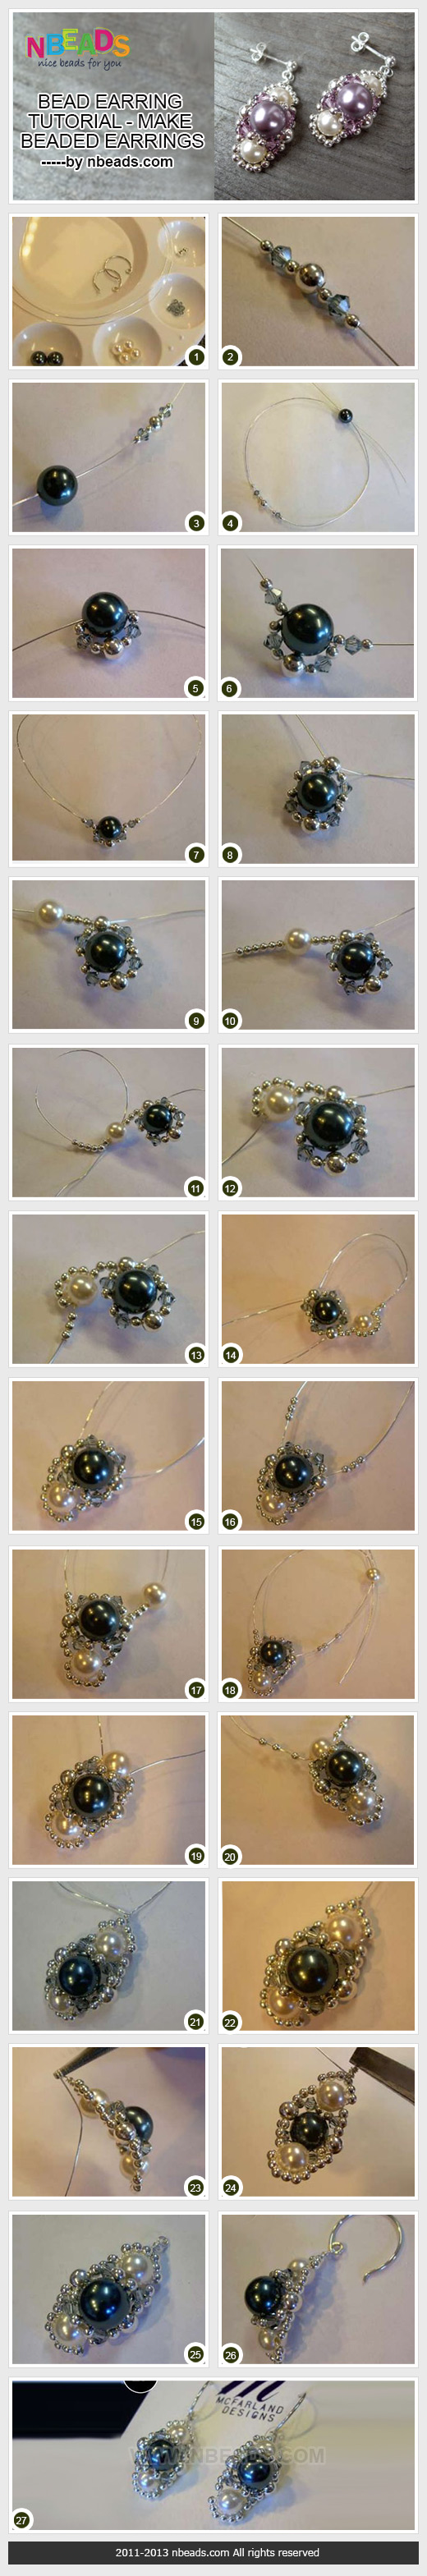 bead earring tutorial - make beaded earrings